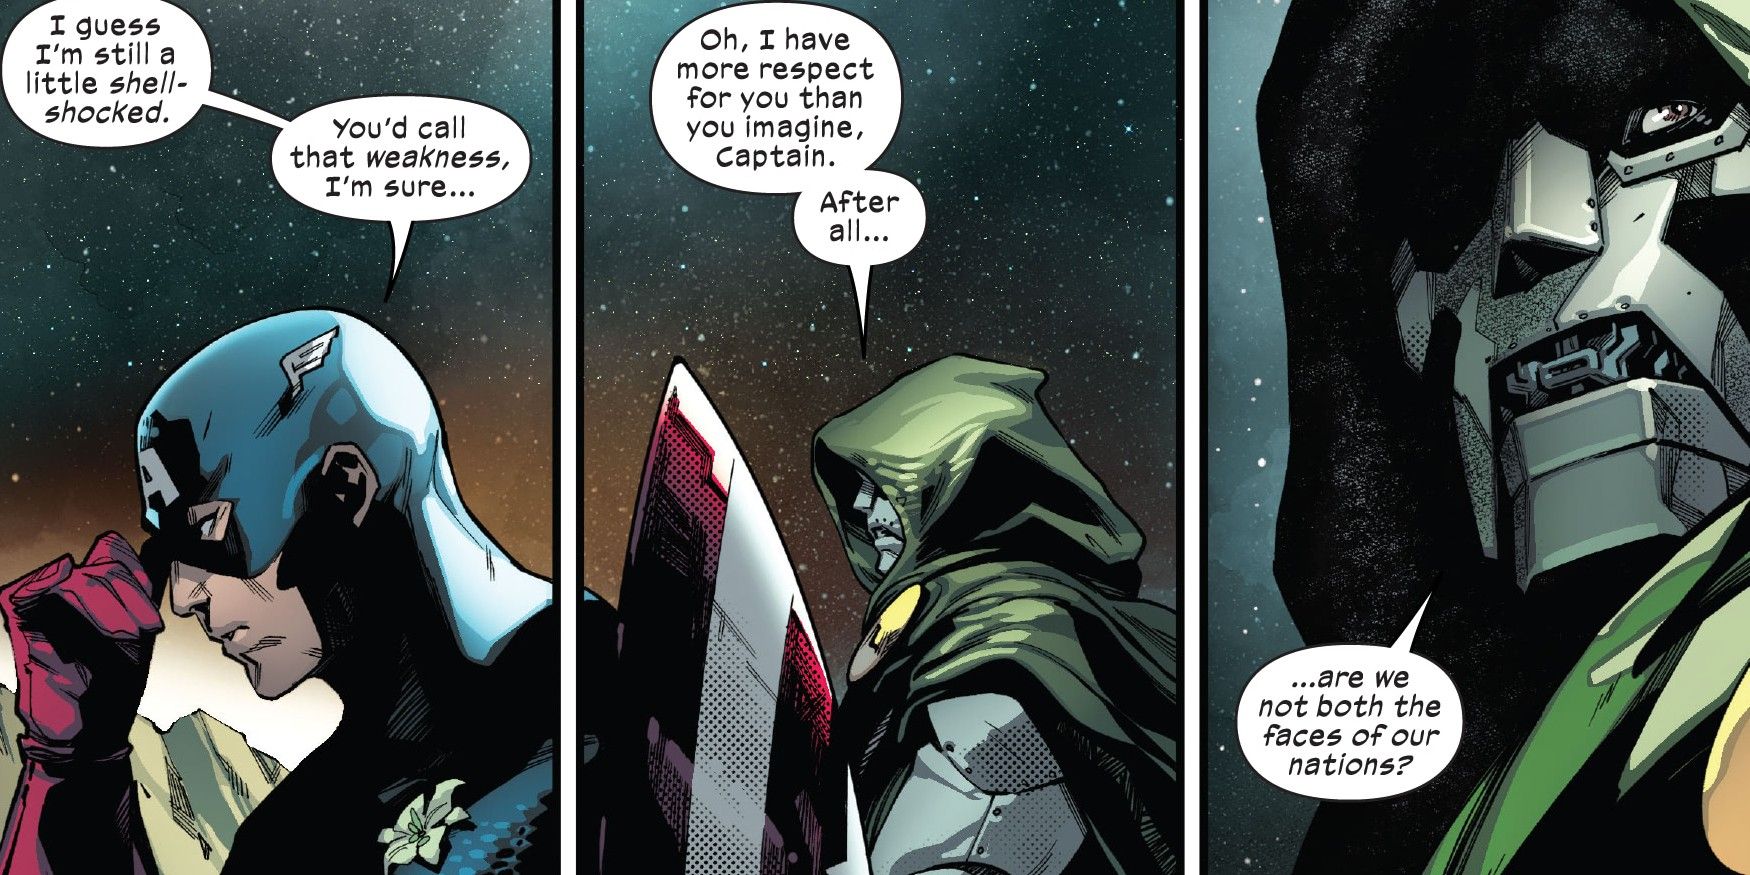 Doctor Doom Telling Captain America He Respects Him in SWORD #6